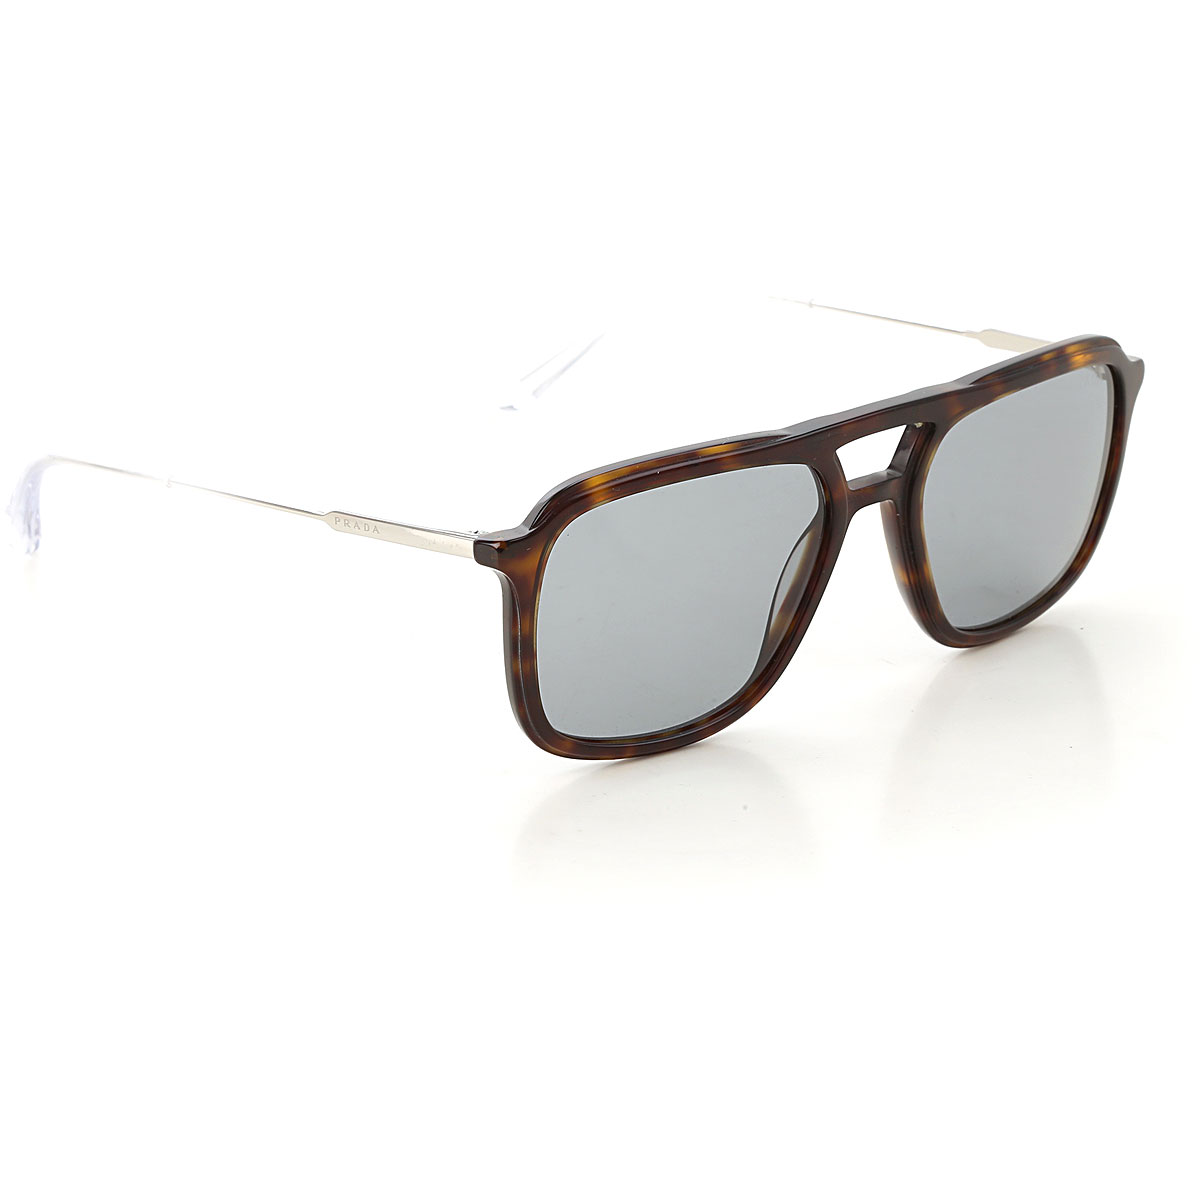 Sunglasses Prada, Style code: spr06v 